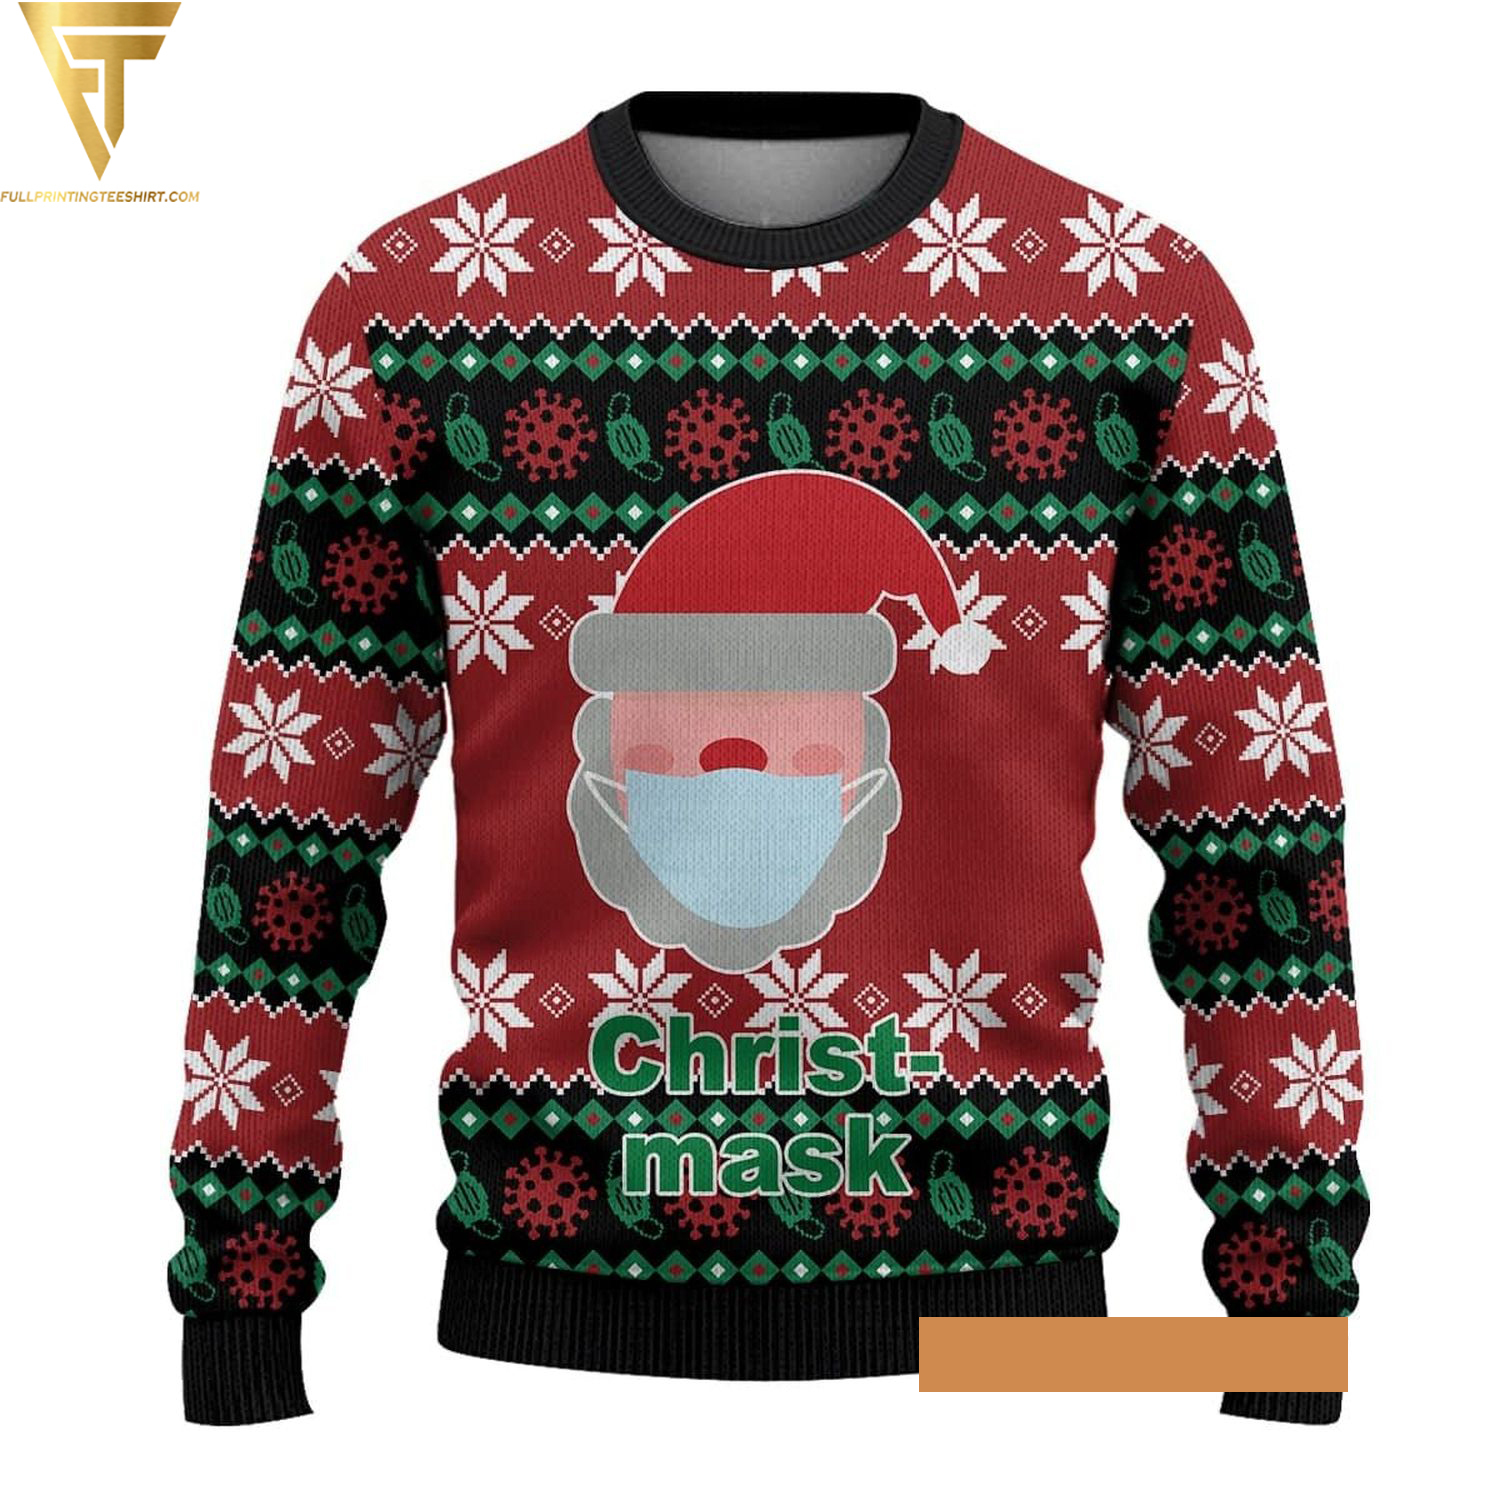 Santa claus chris-mask ugly christmas sweater - Copy (2)